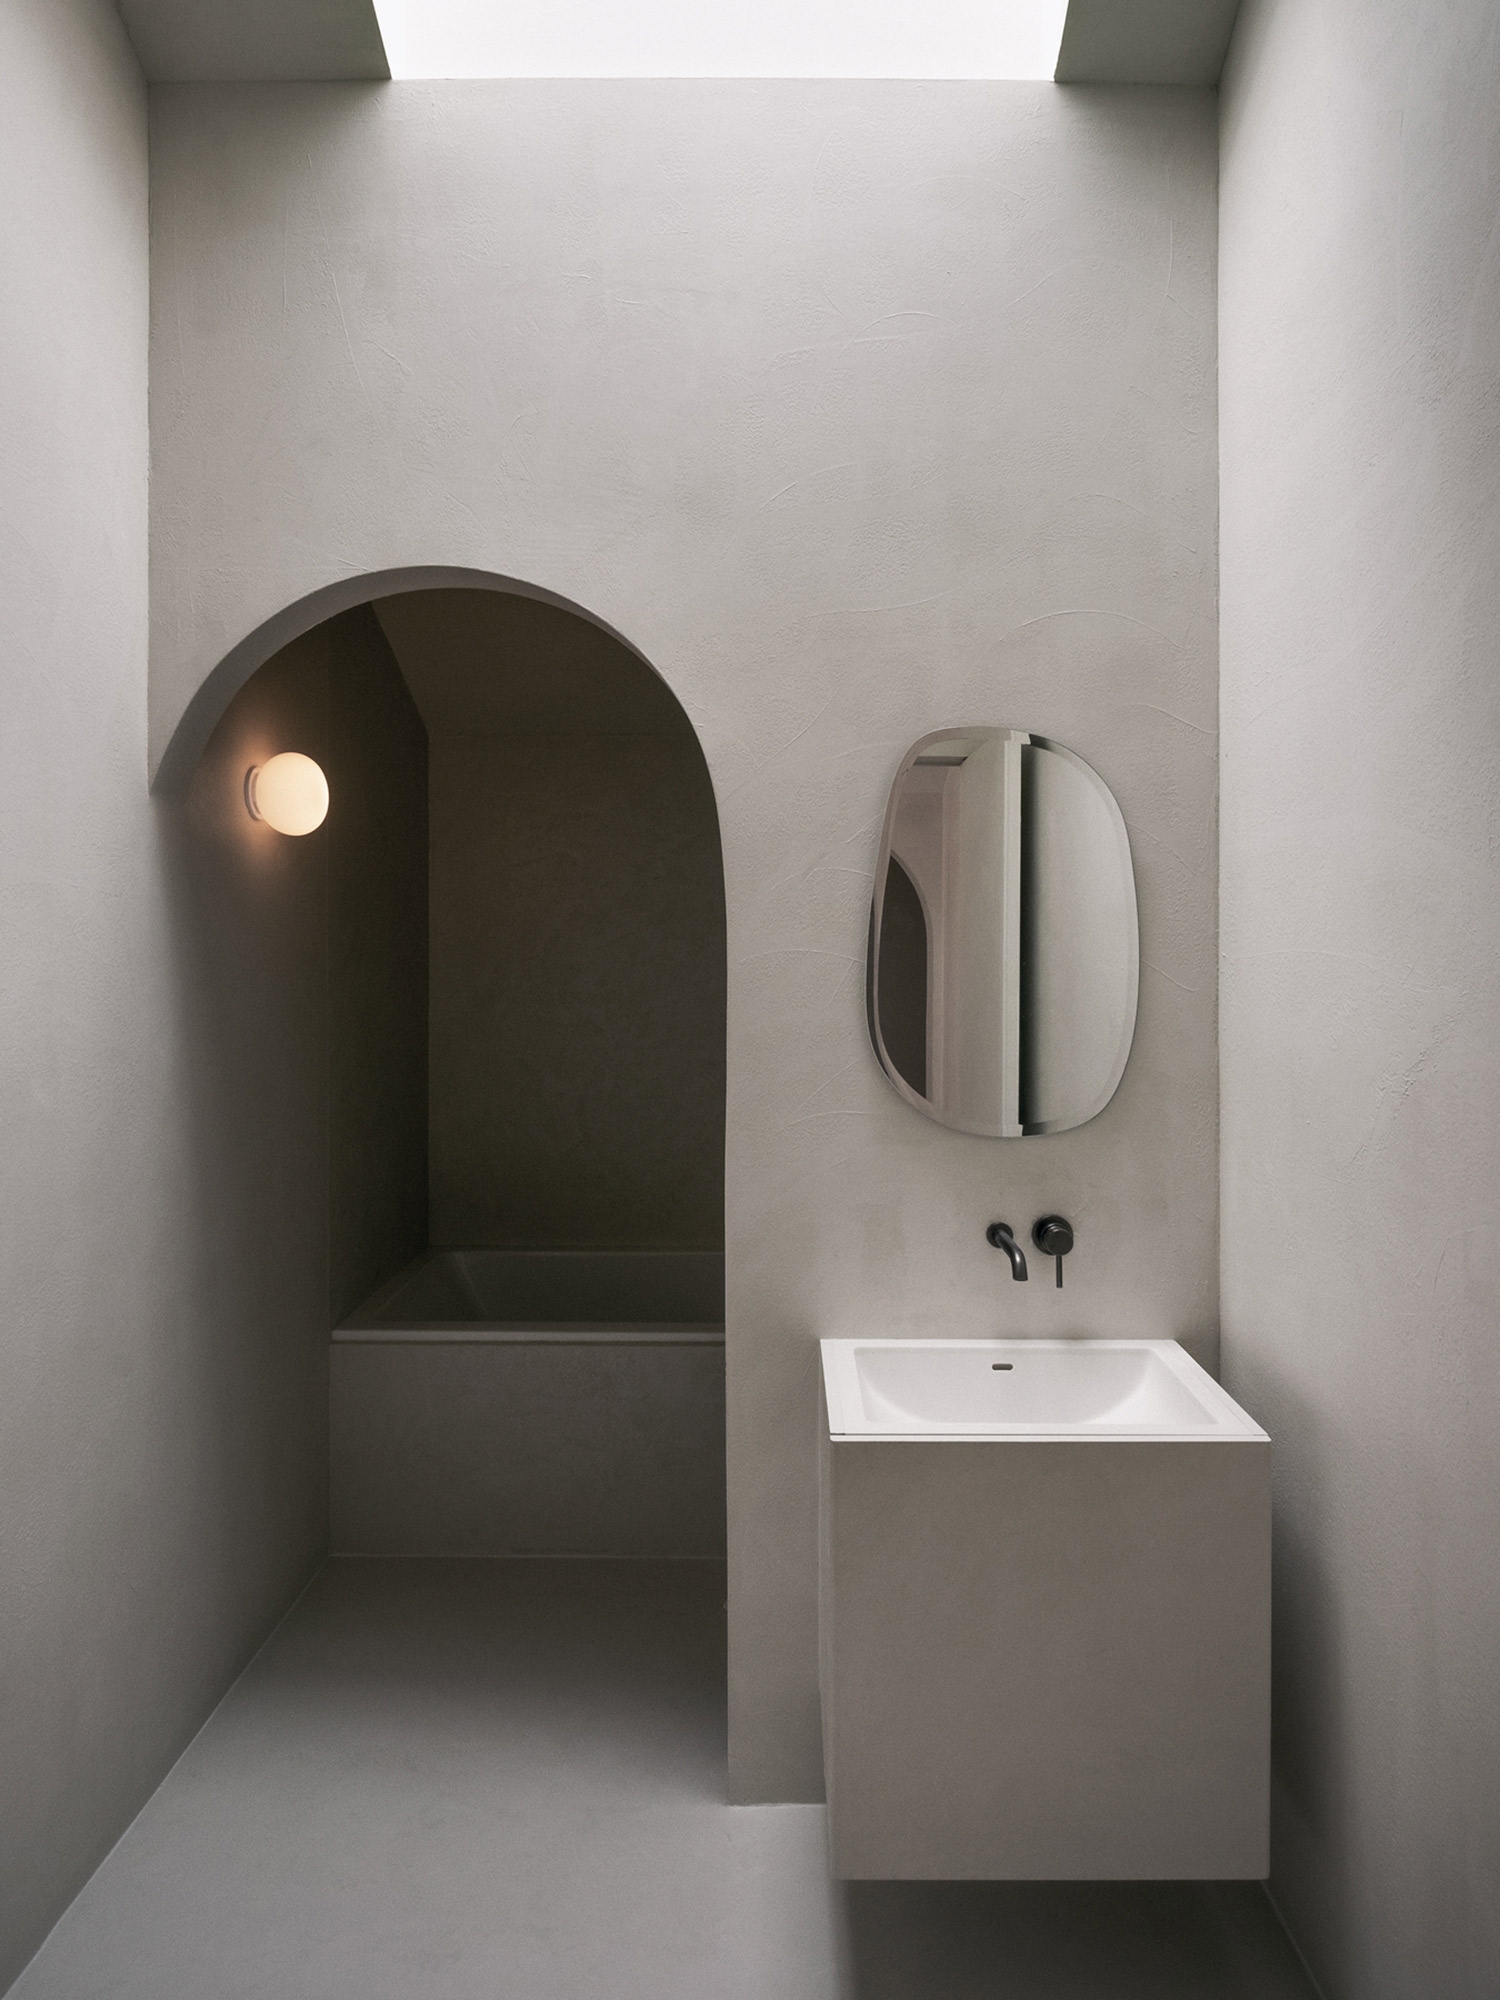 Minimalist white bathroom with oval mirror